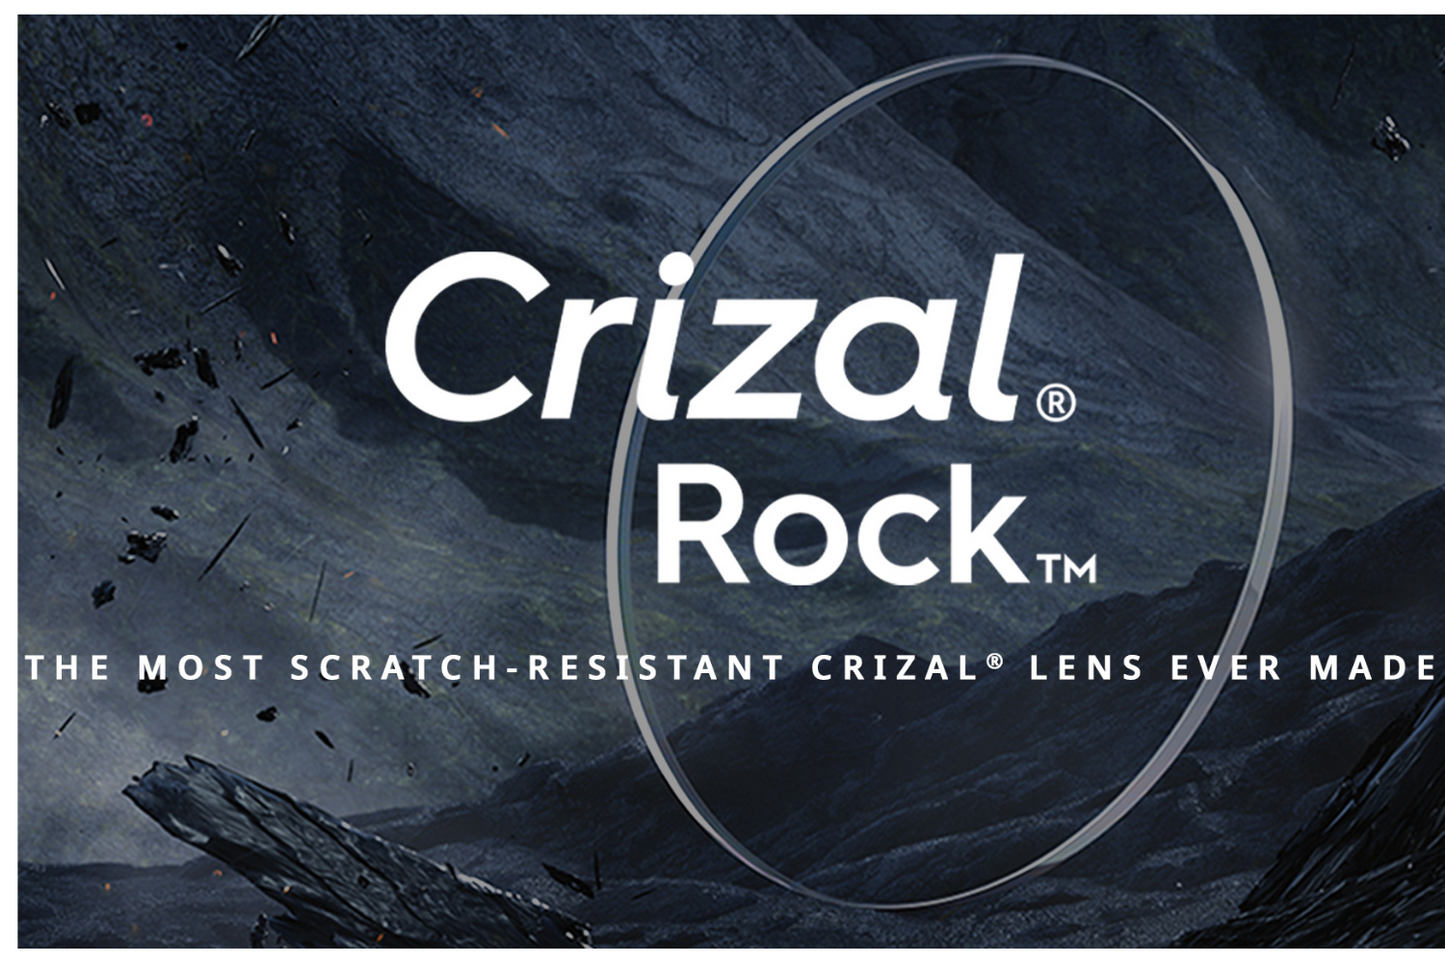 Essilor Crizal EVERYDAY ROCK PROGRESSIVE Lenses